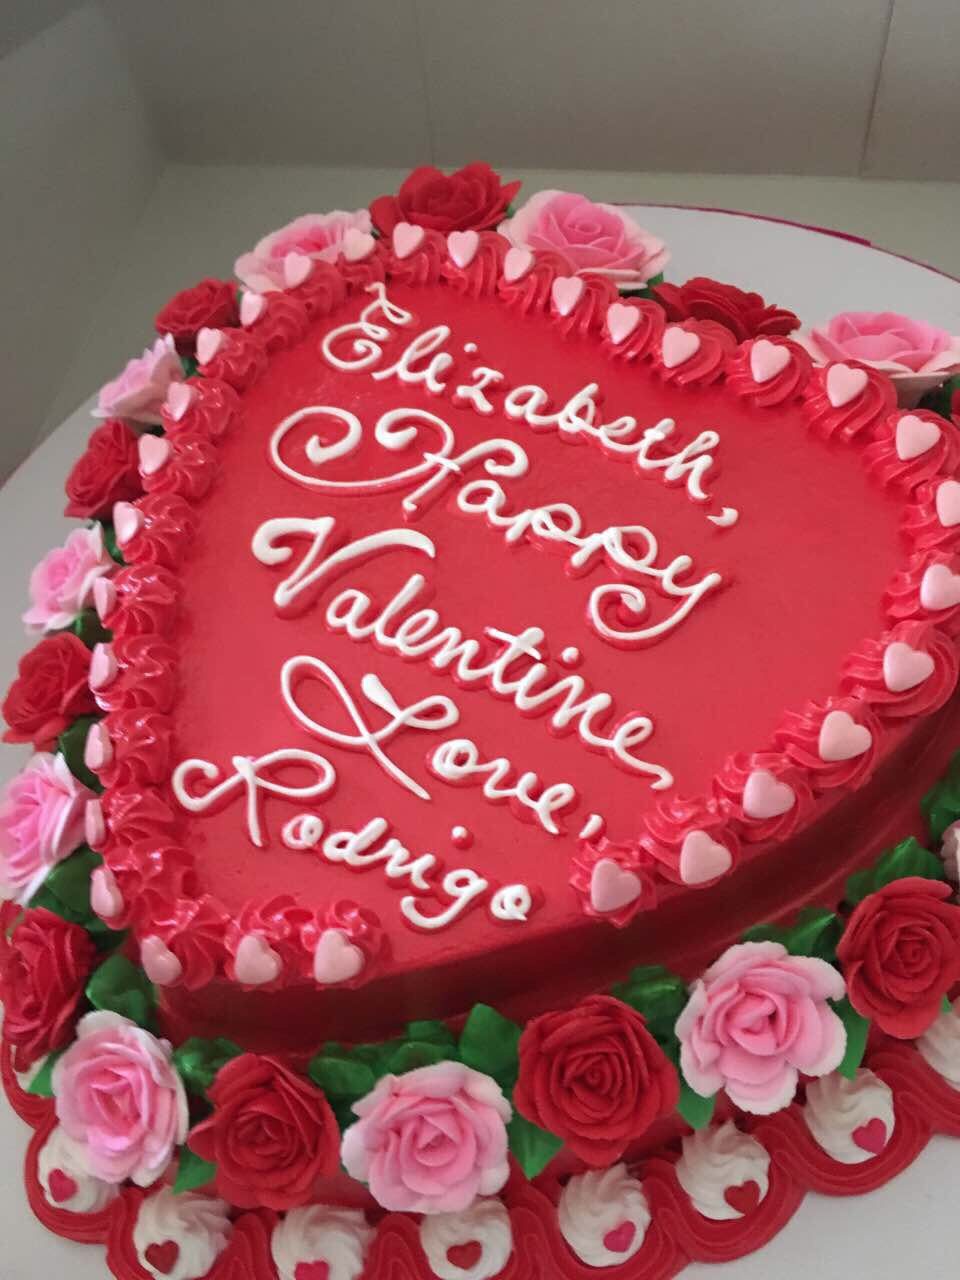 LOOK: Duterte sends ex-wife flowers, cake on Valentine’s Day